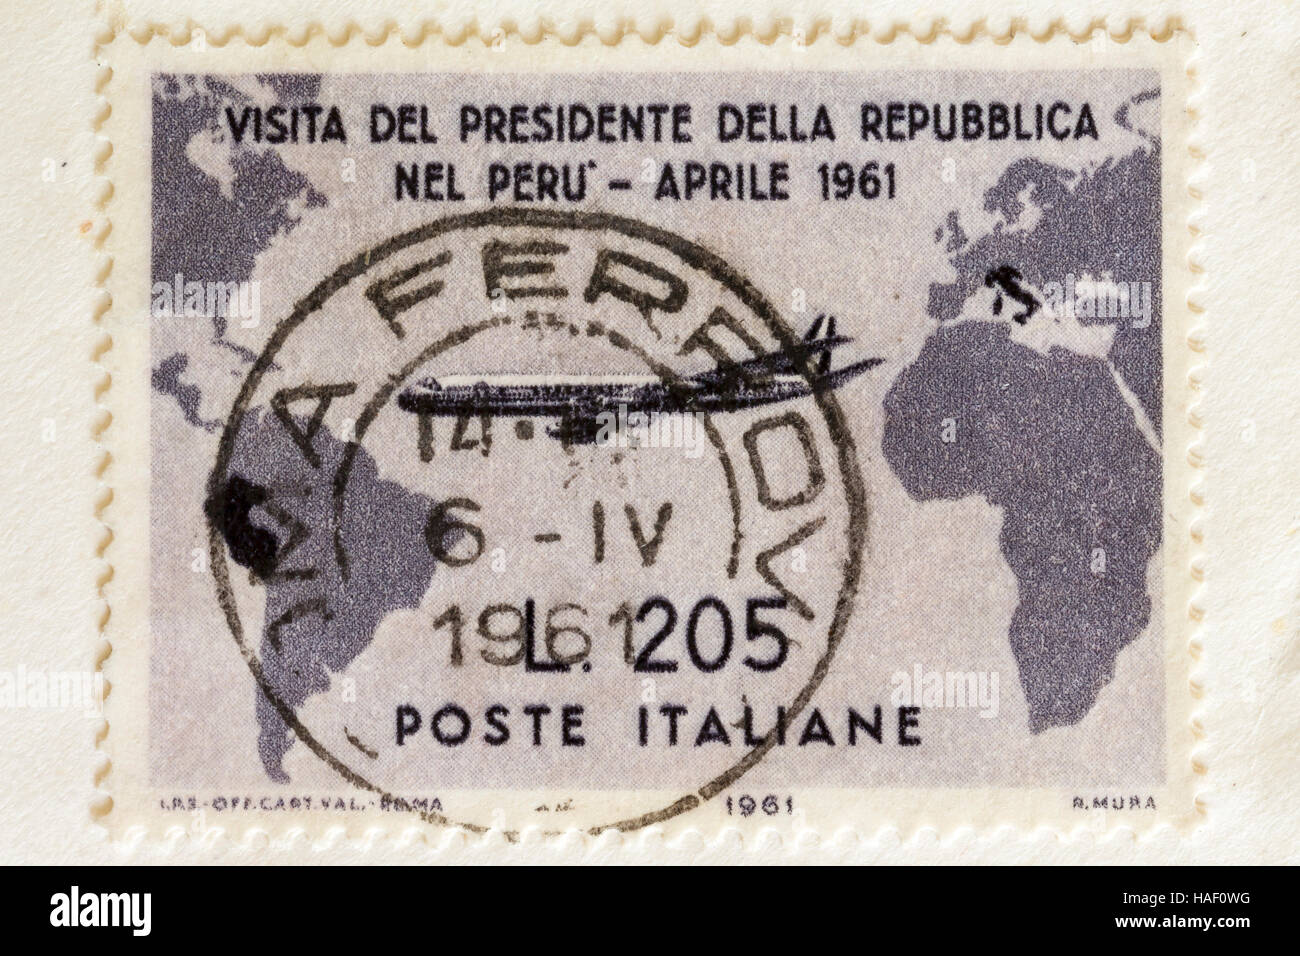 Biella, Italy - November 26, 2016. Rare post stamp  depicting the visit of President Gronchi in Peru in april 1961 Stock Photo